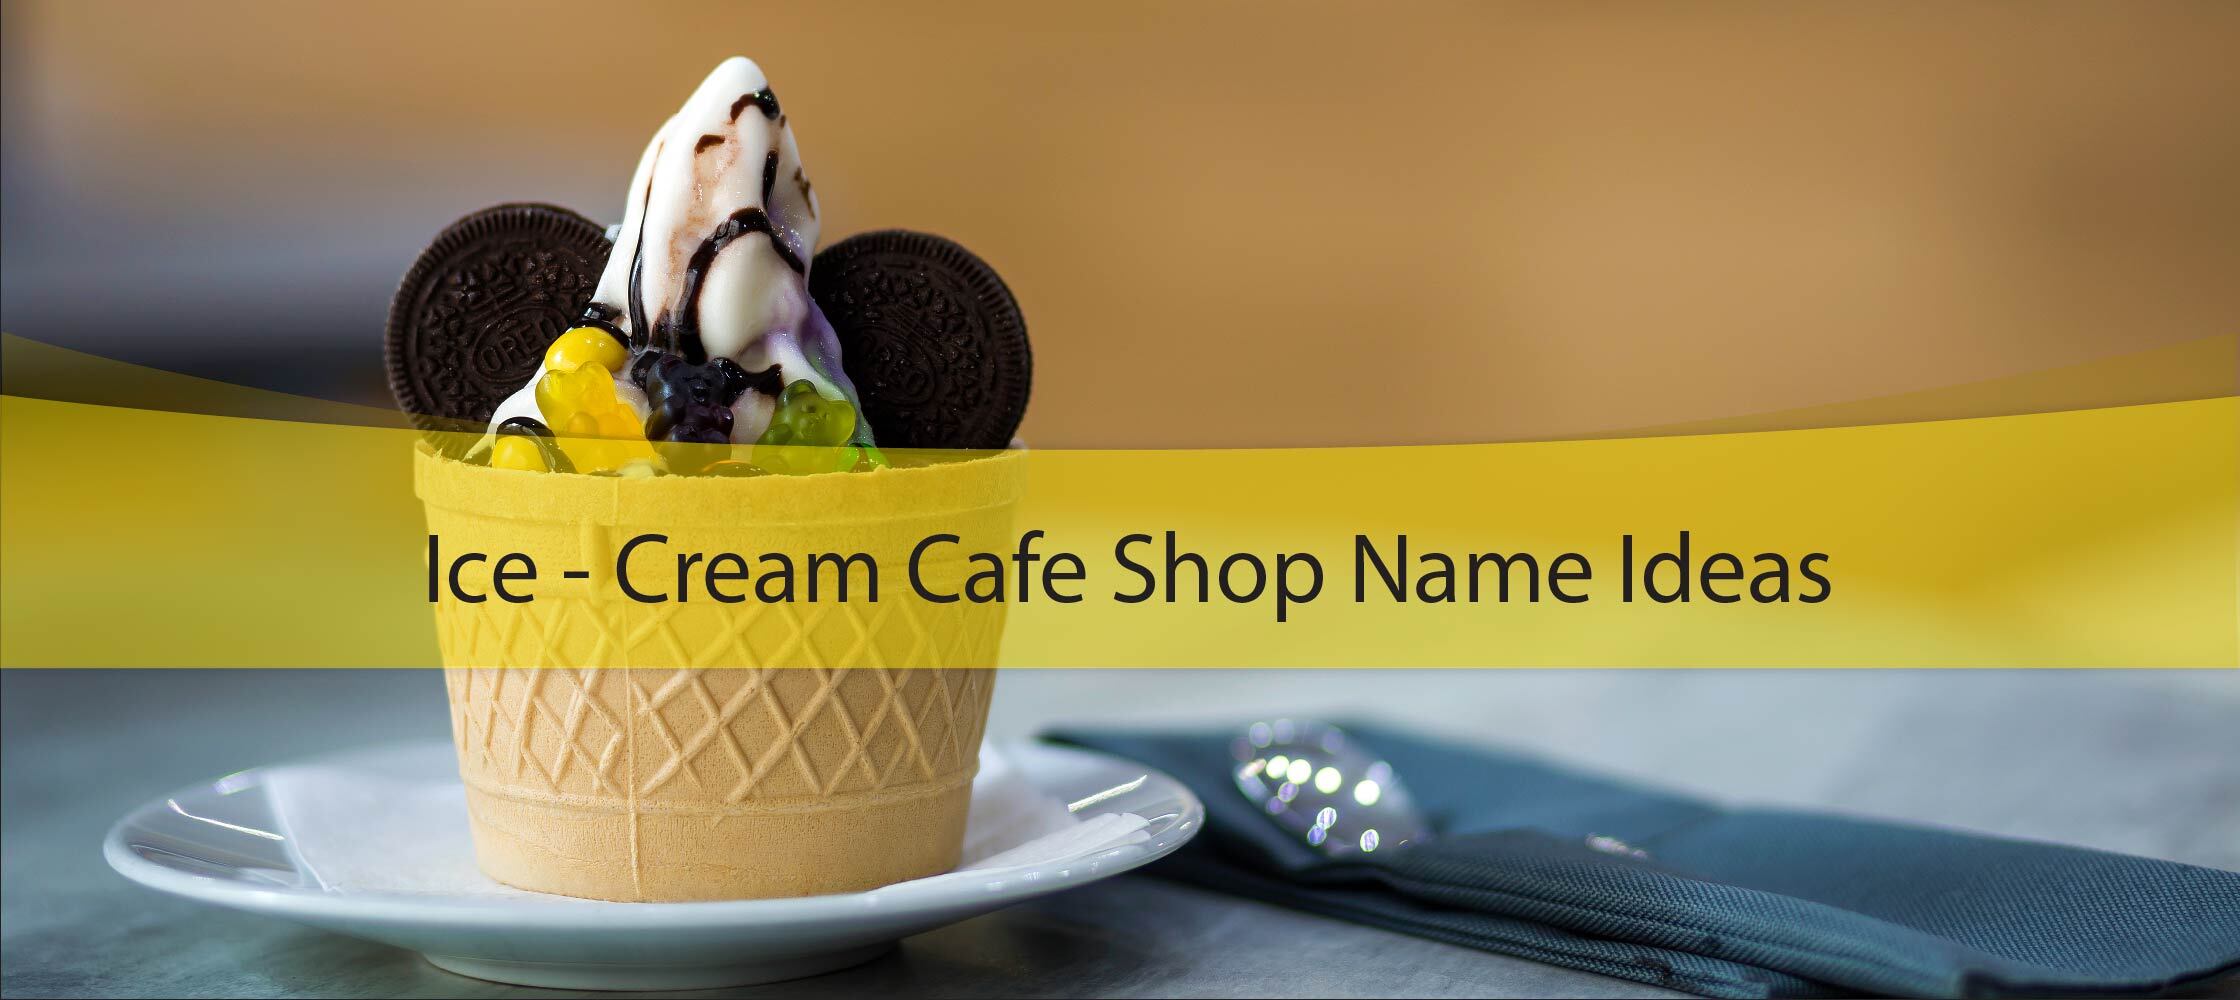 Ice-Cream Cafe Shop Name Ideas